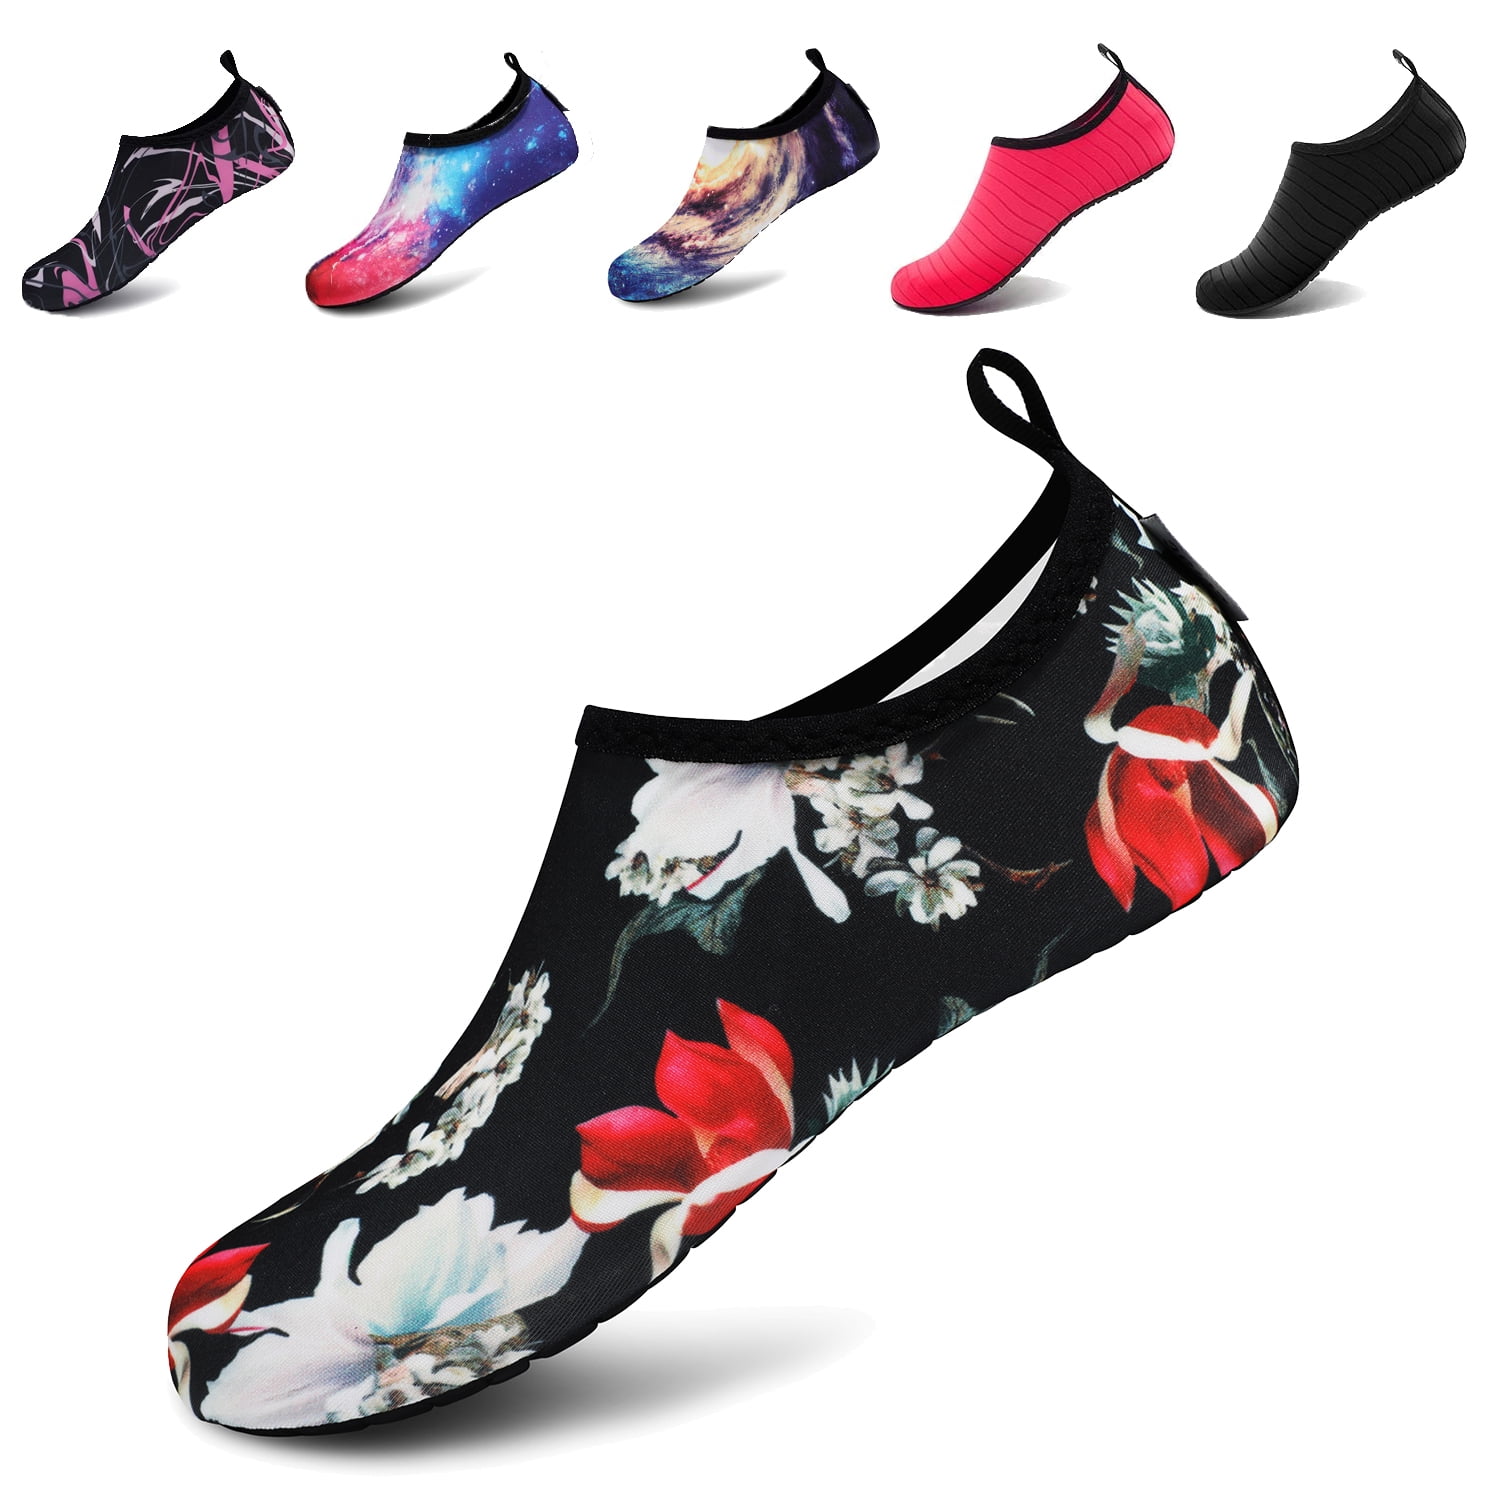 Mens Water Sports Shoes Barefoot Quick-Dry Aqua Yoga Socks Beach Swim Wetsuits 